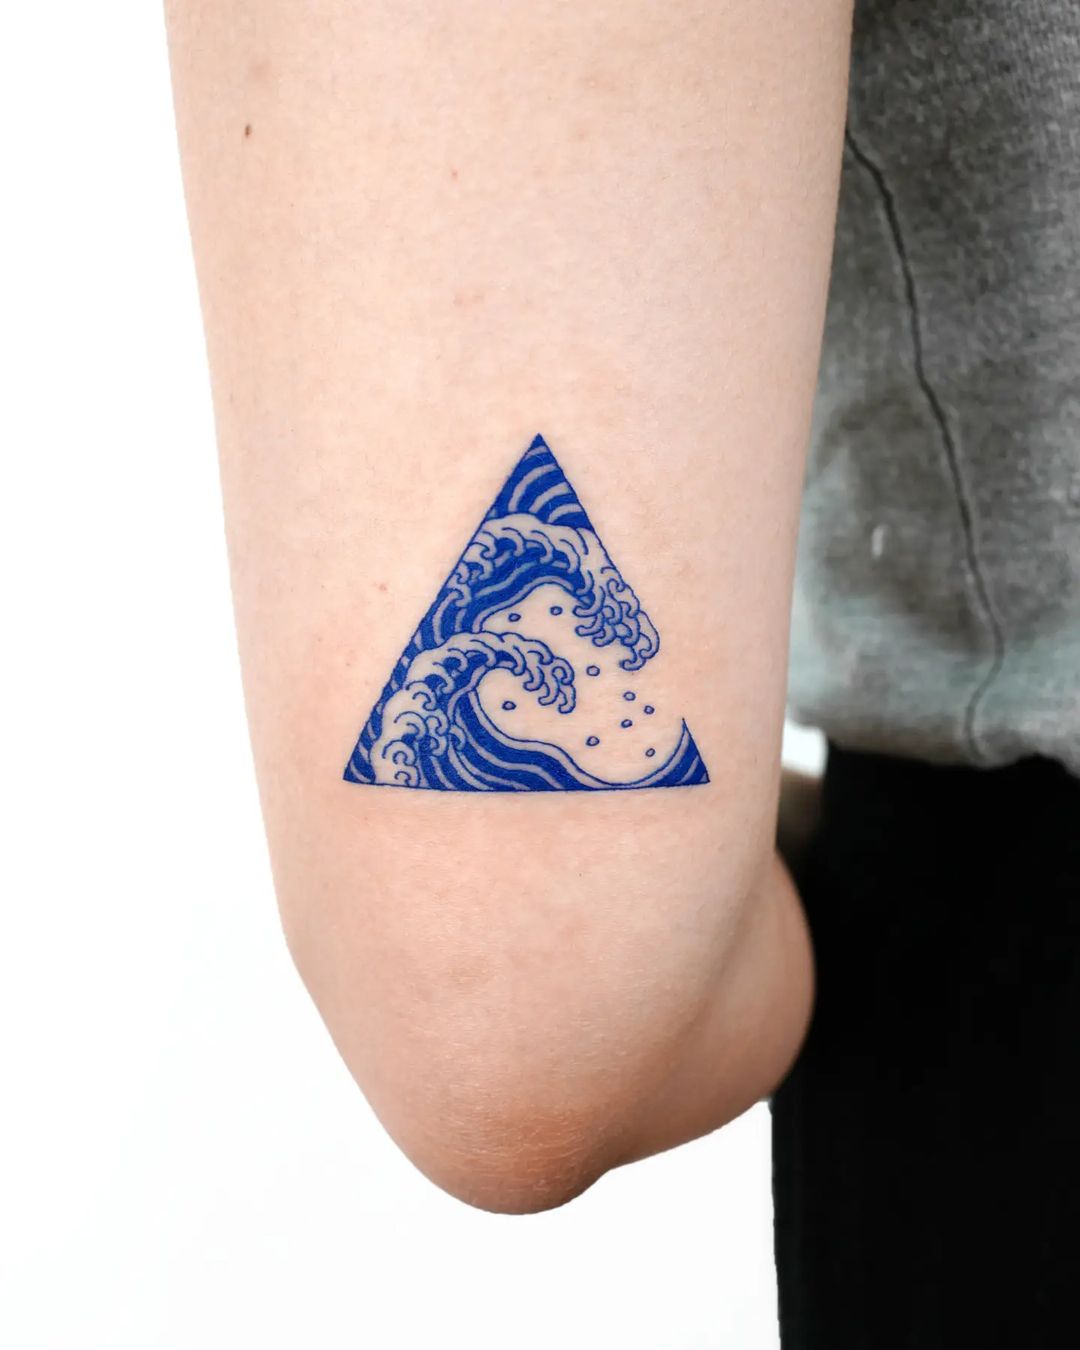 Tiny triangle tattoo design by nobodytattoo